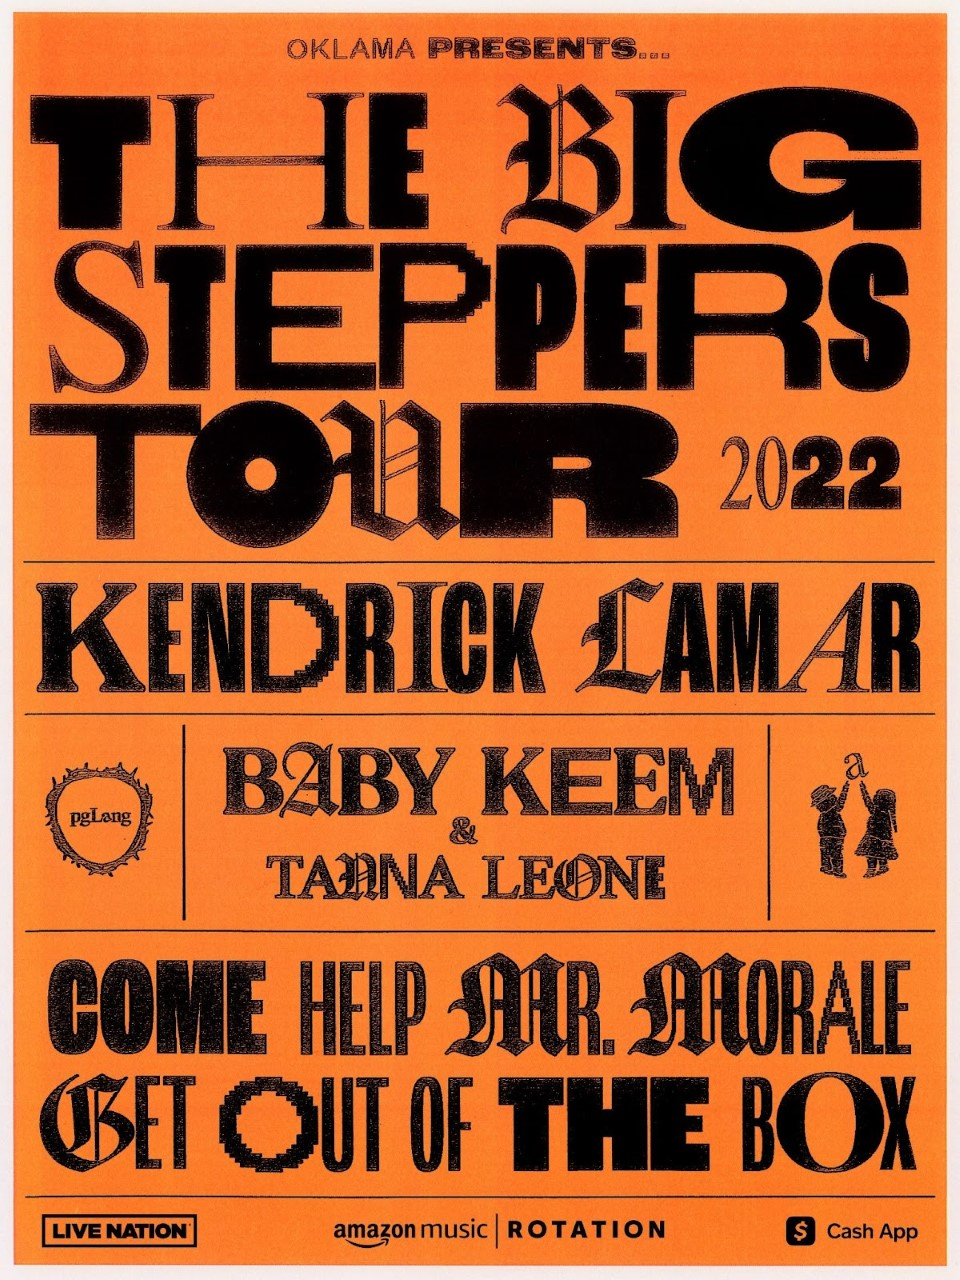 Kendrick Lamar will livestream Paris concert on  on Saturday 